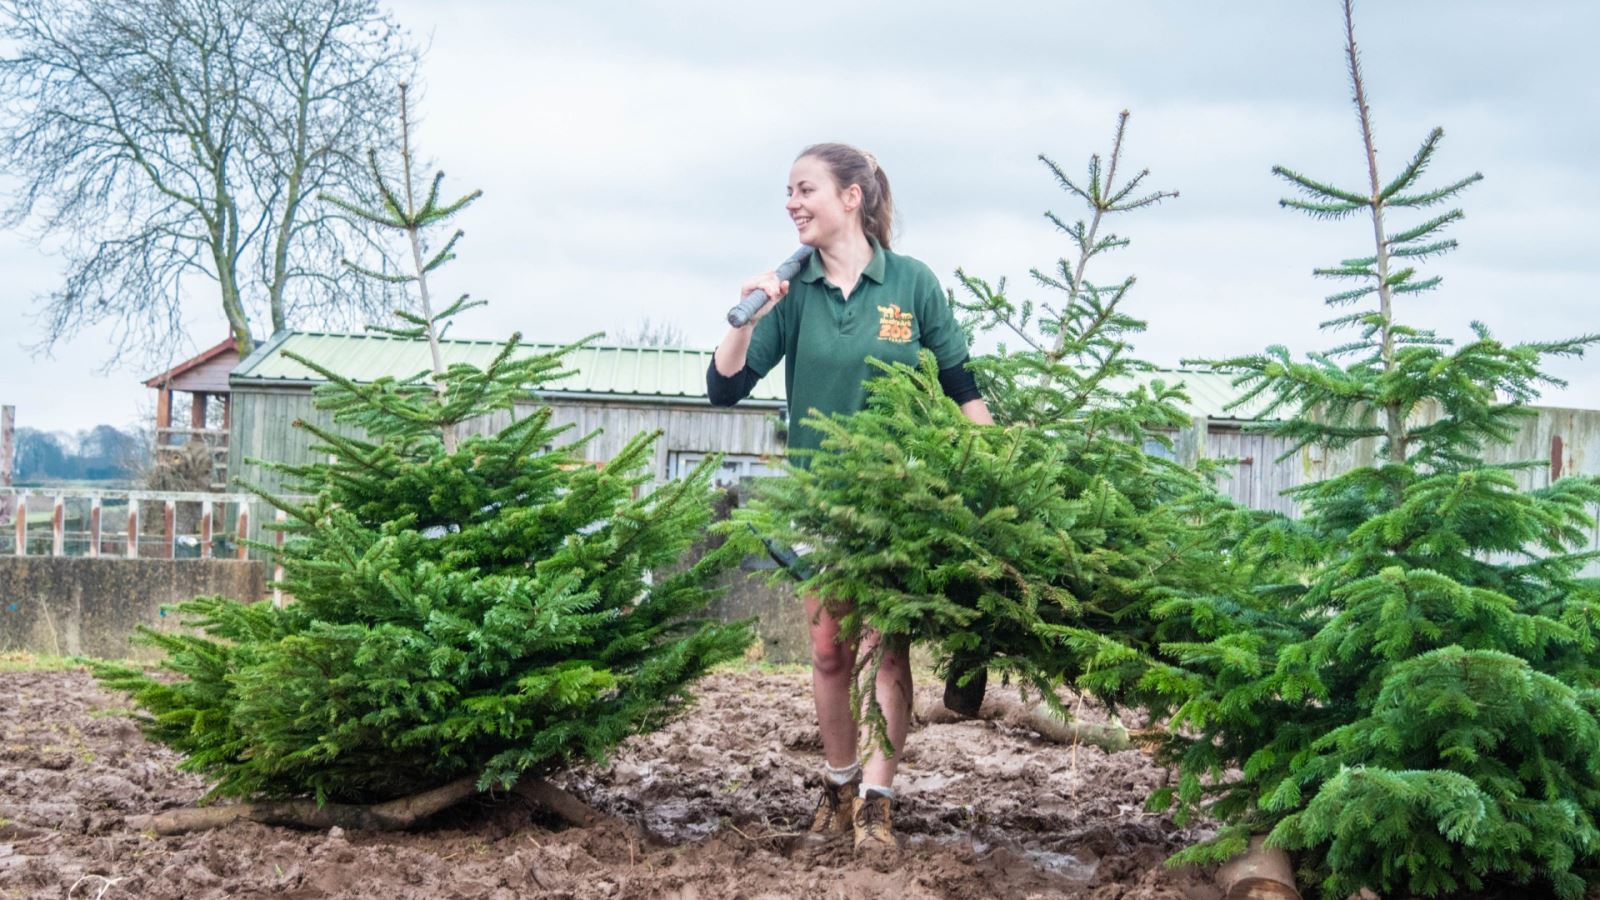  Lead Keeper Jayne Gibbins planting Christmas trees for enrichment